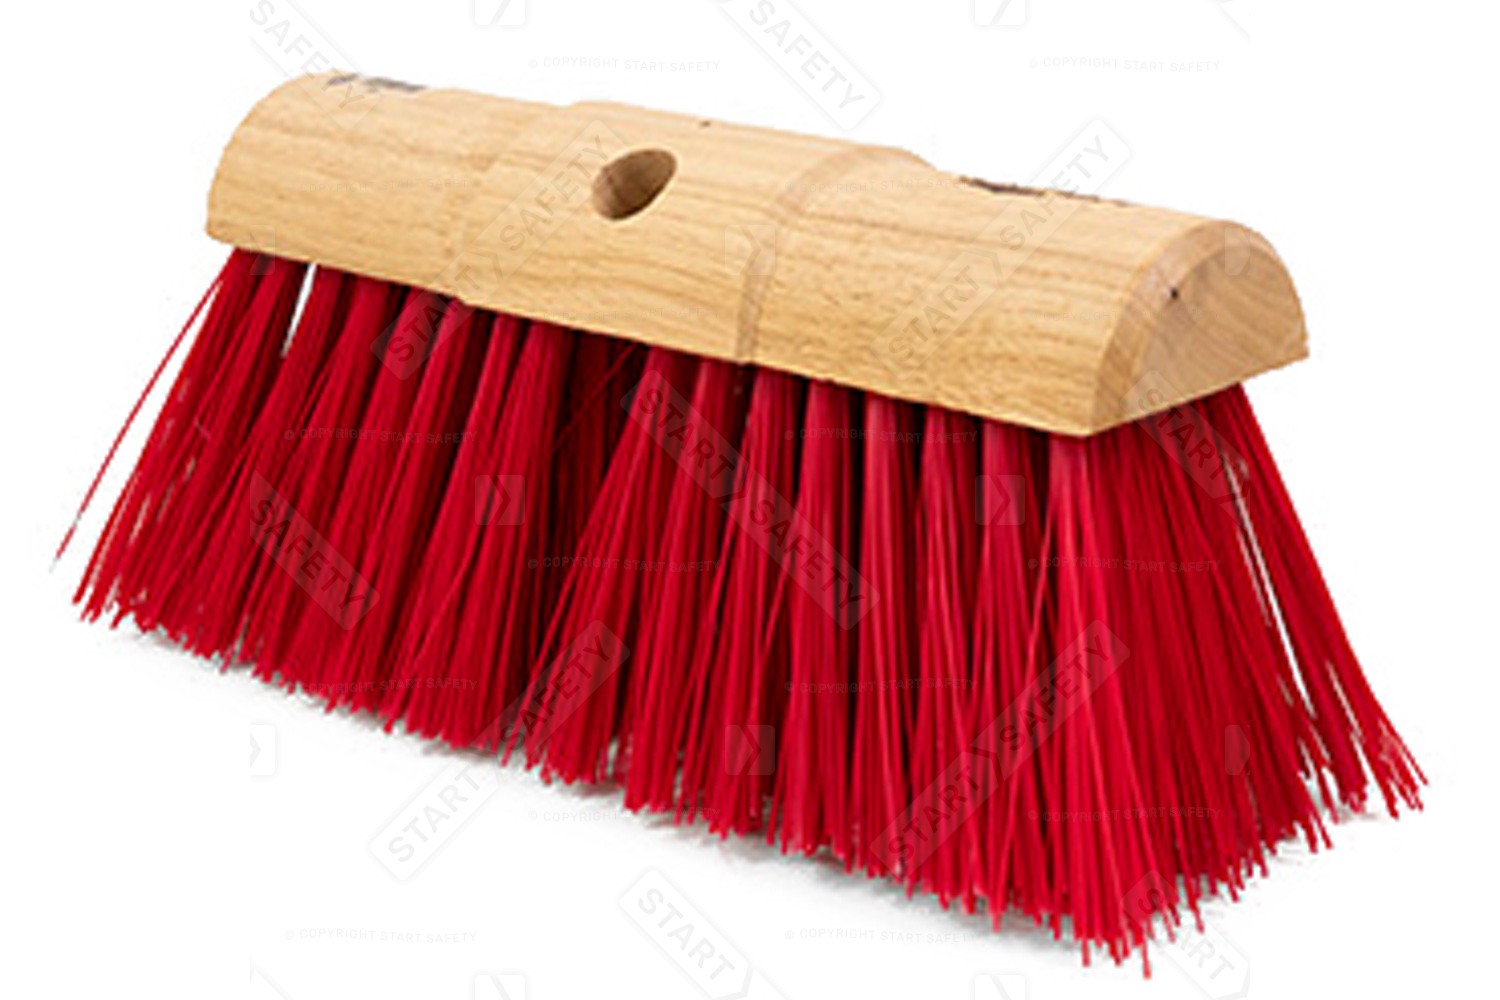 Hillbrush P12 Yard Broom